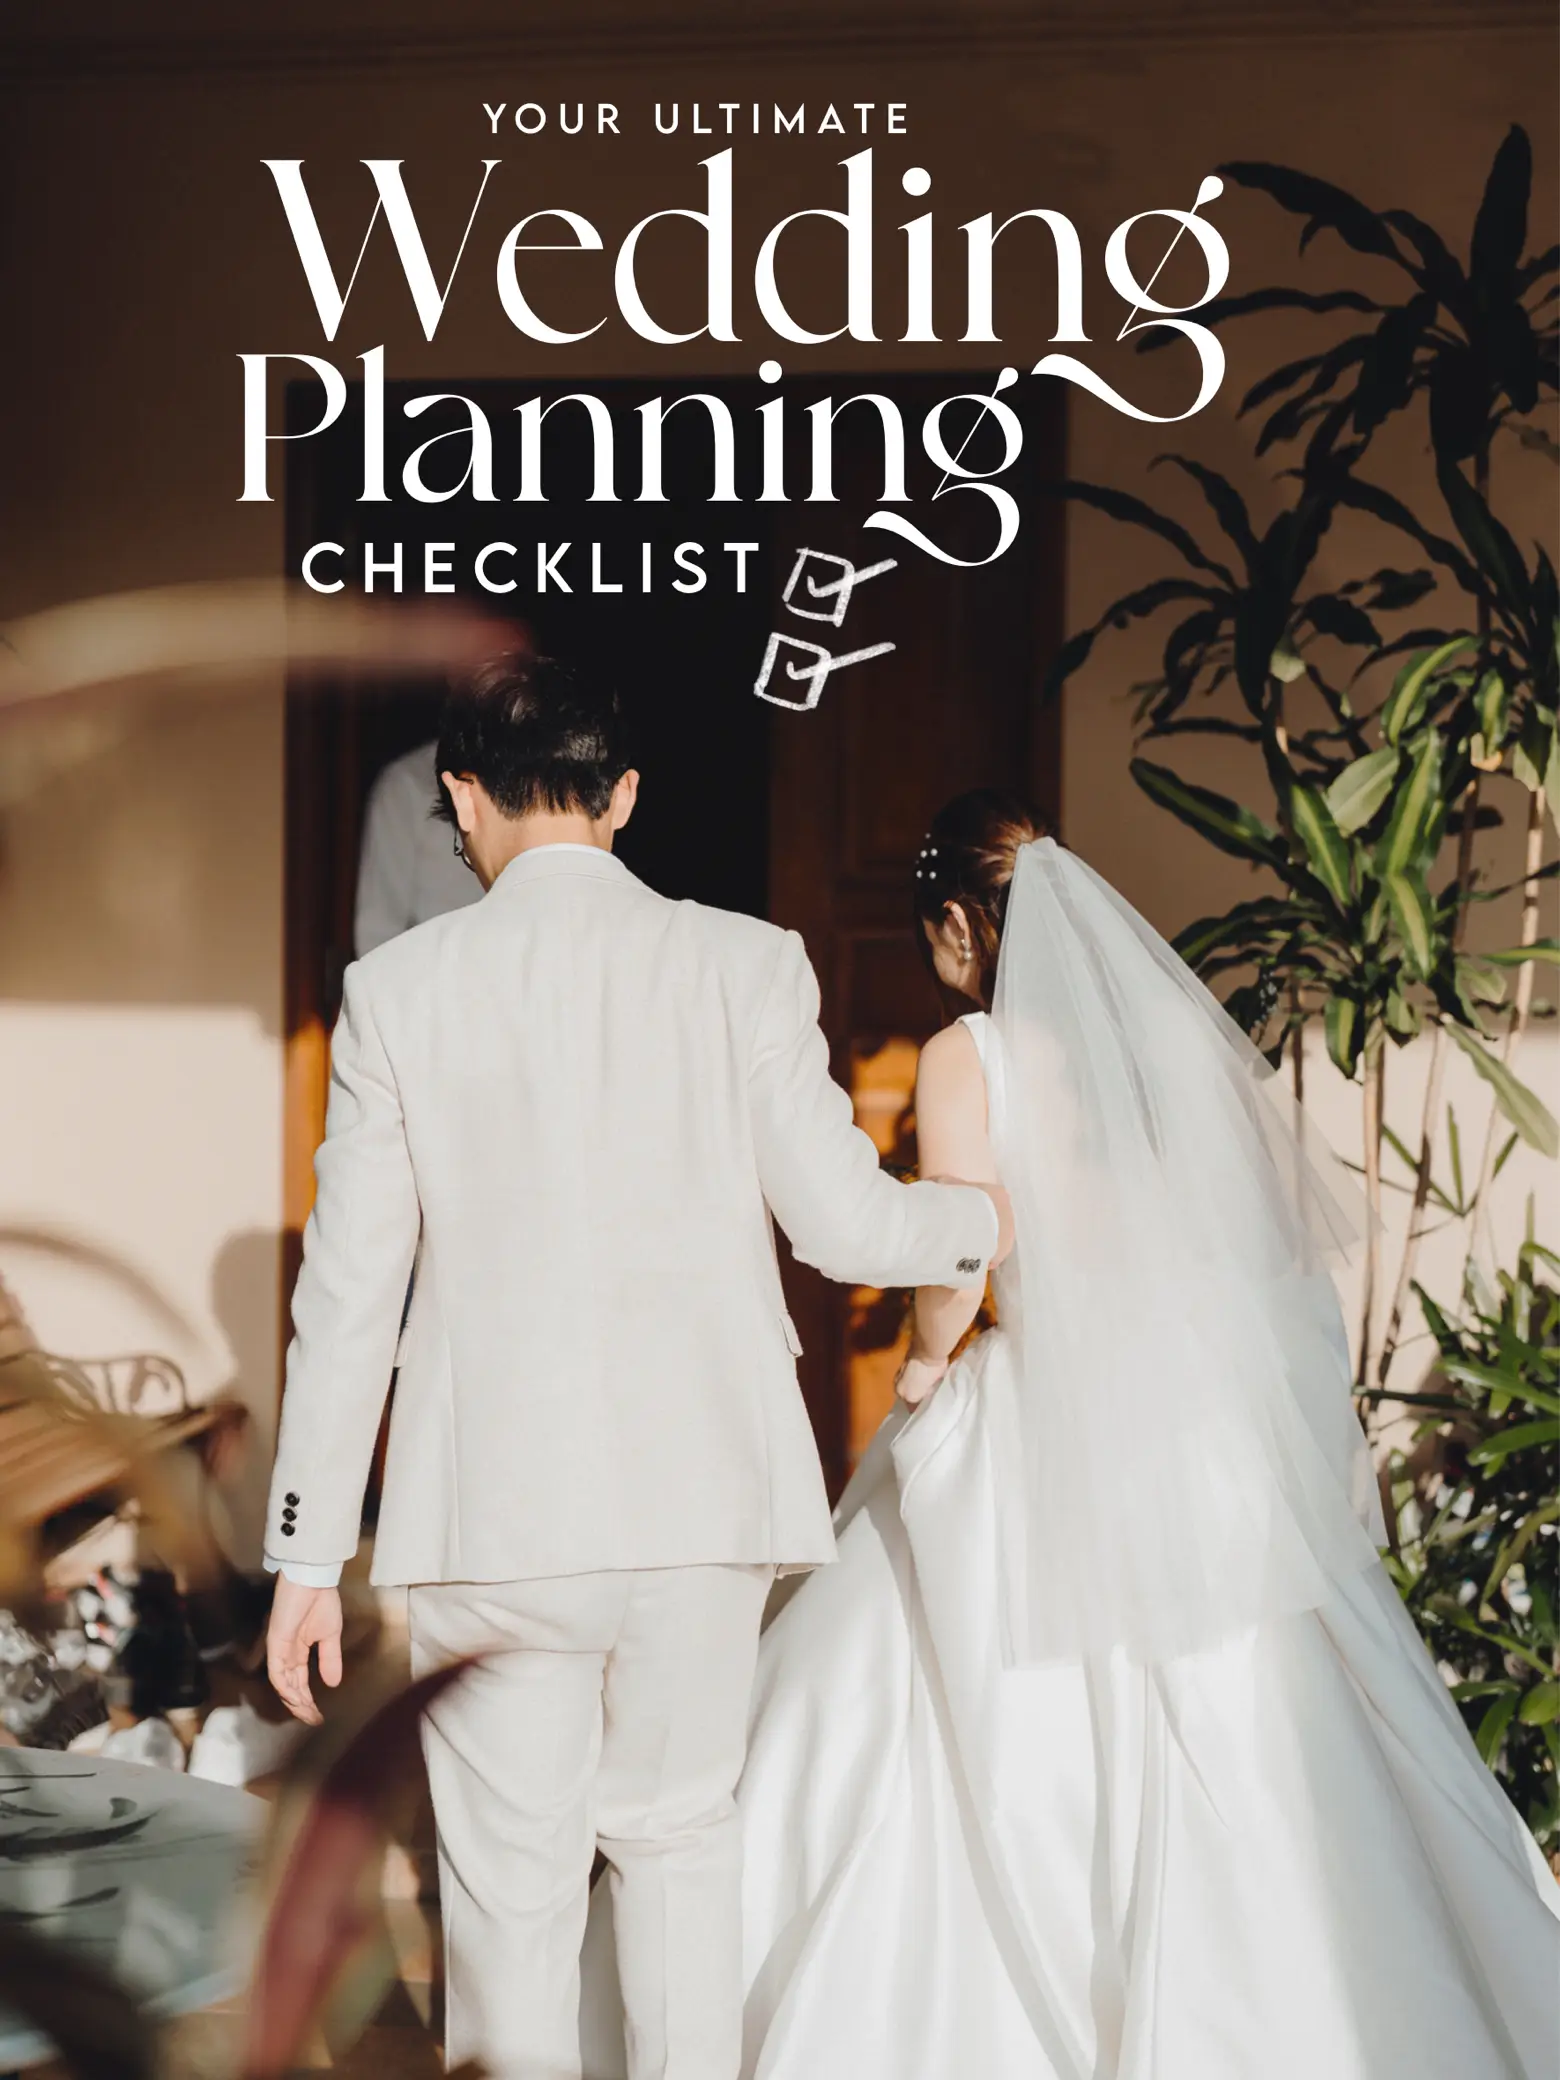 The Ultimate Wedding Checklist & Wedding Planning Timeline 